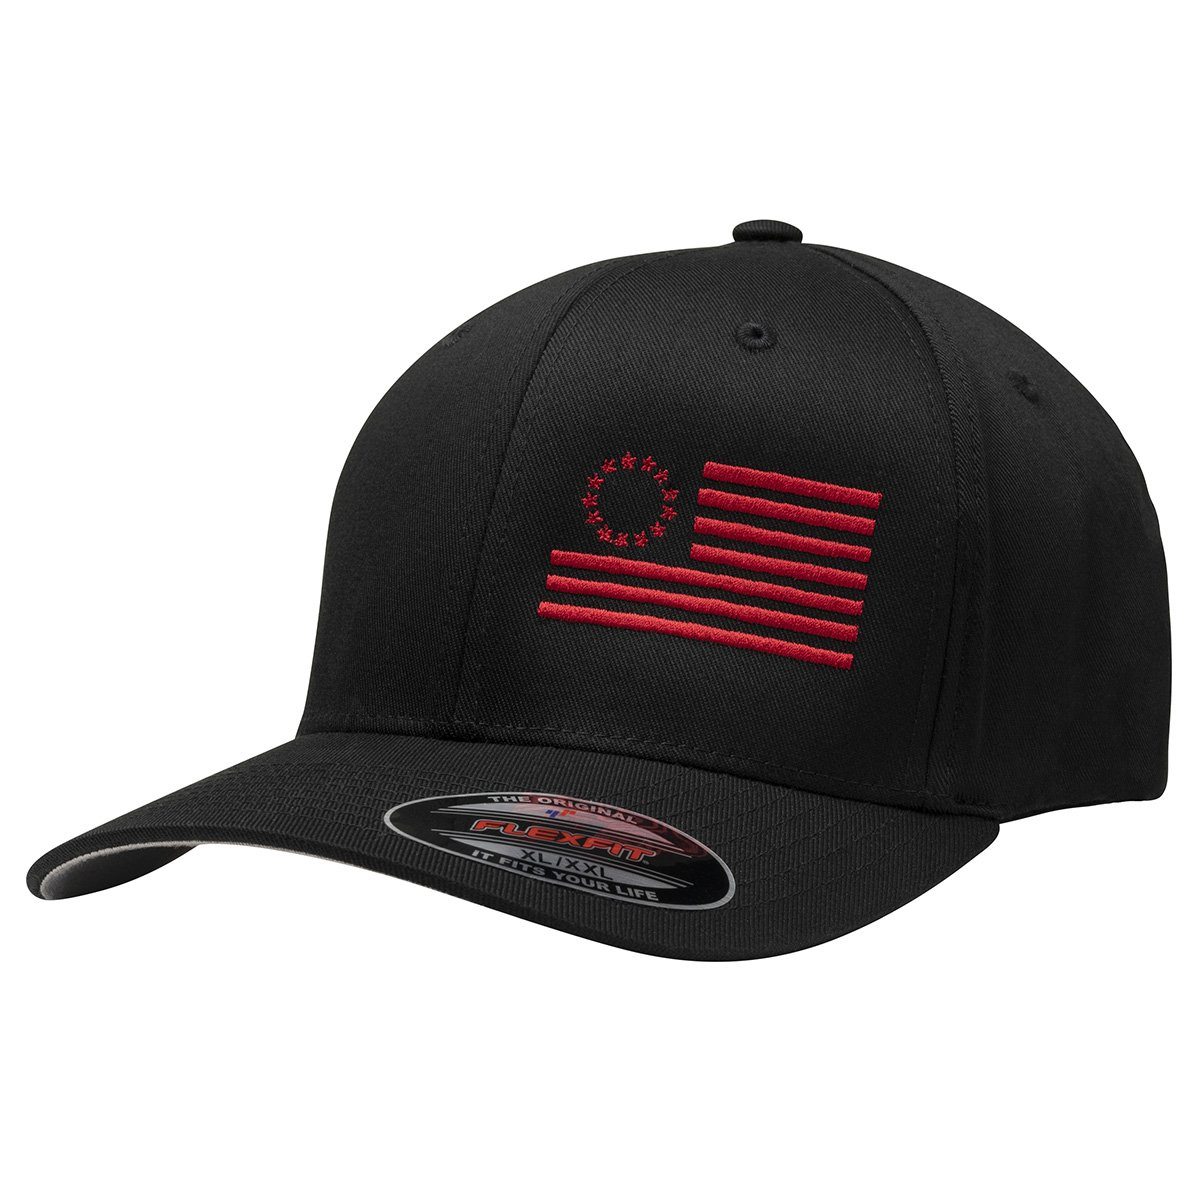 The Black B Ross Flexfit Side Flag Hat